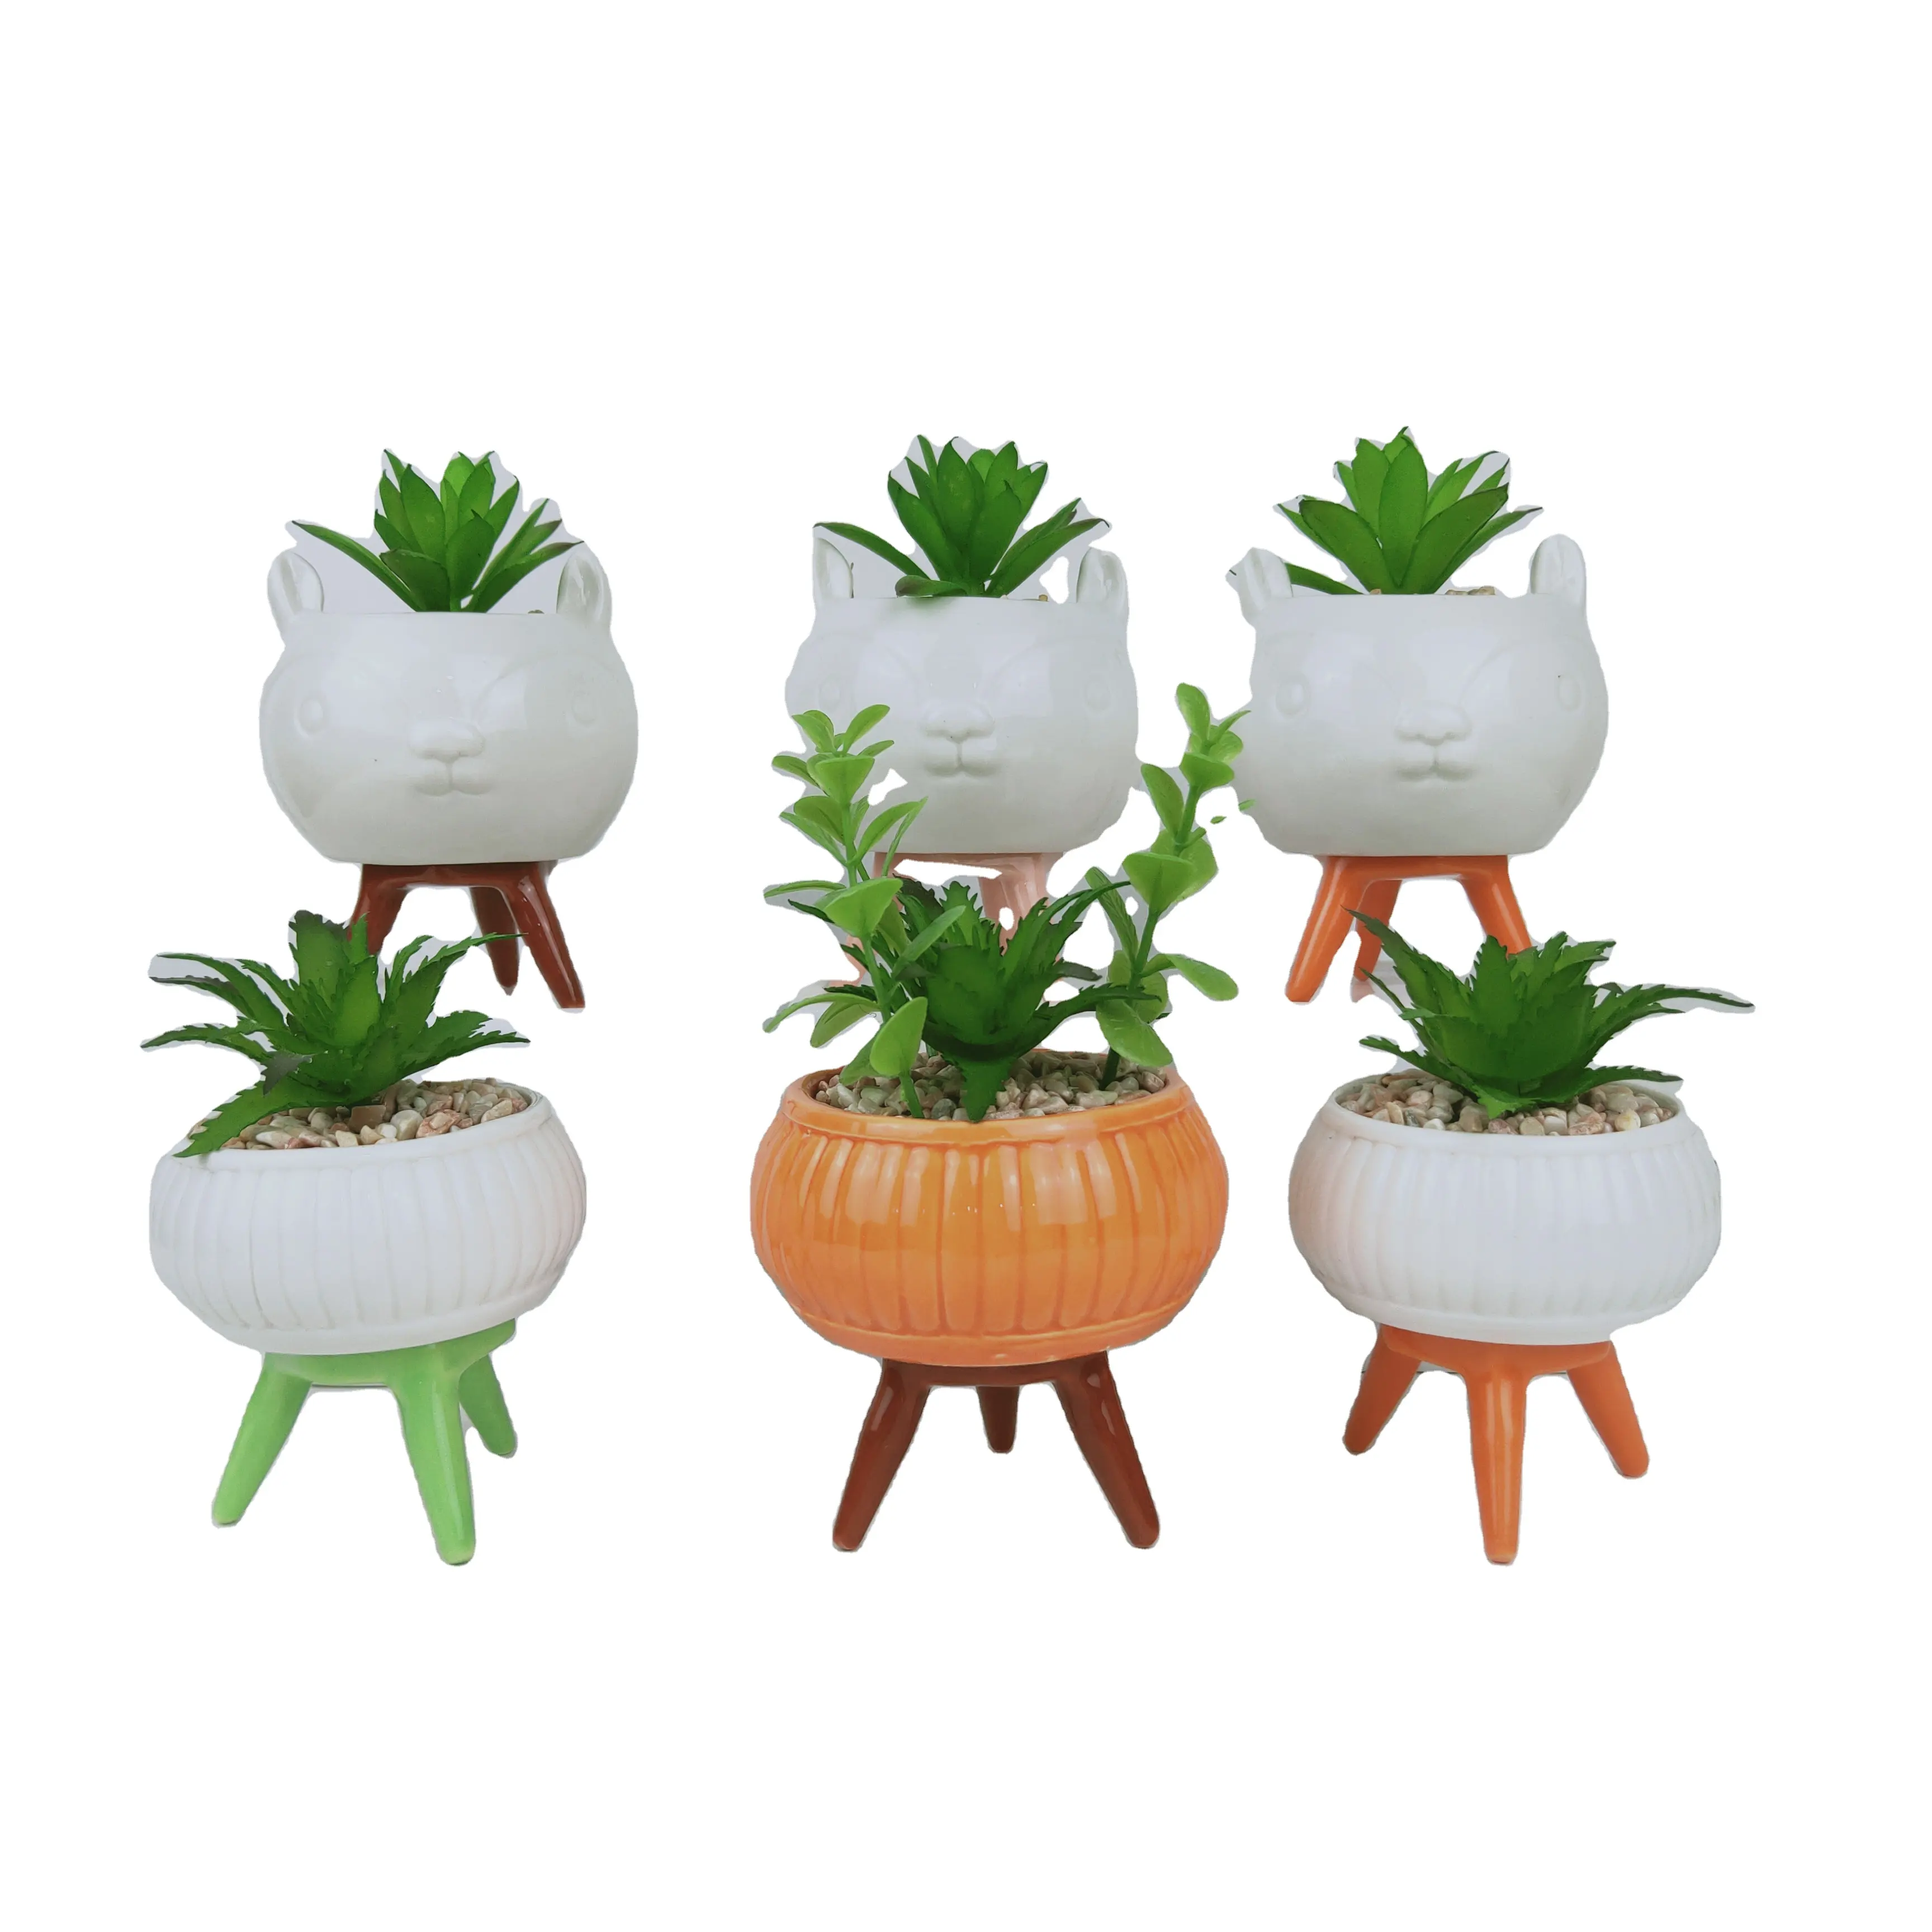 Round Ceramic Succulent Planter pot, white indoor Balcony Cactus Plant pot with Stand ,4 inch Ceramic pot for flower plant